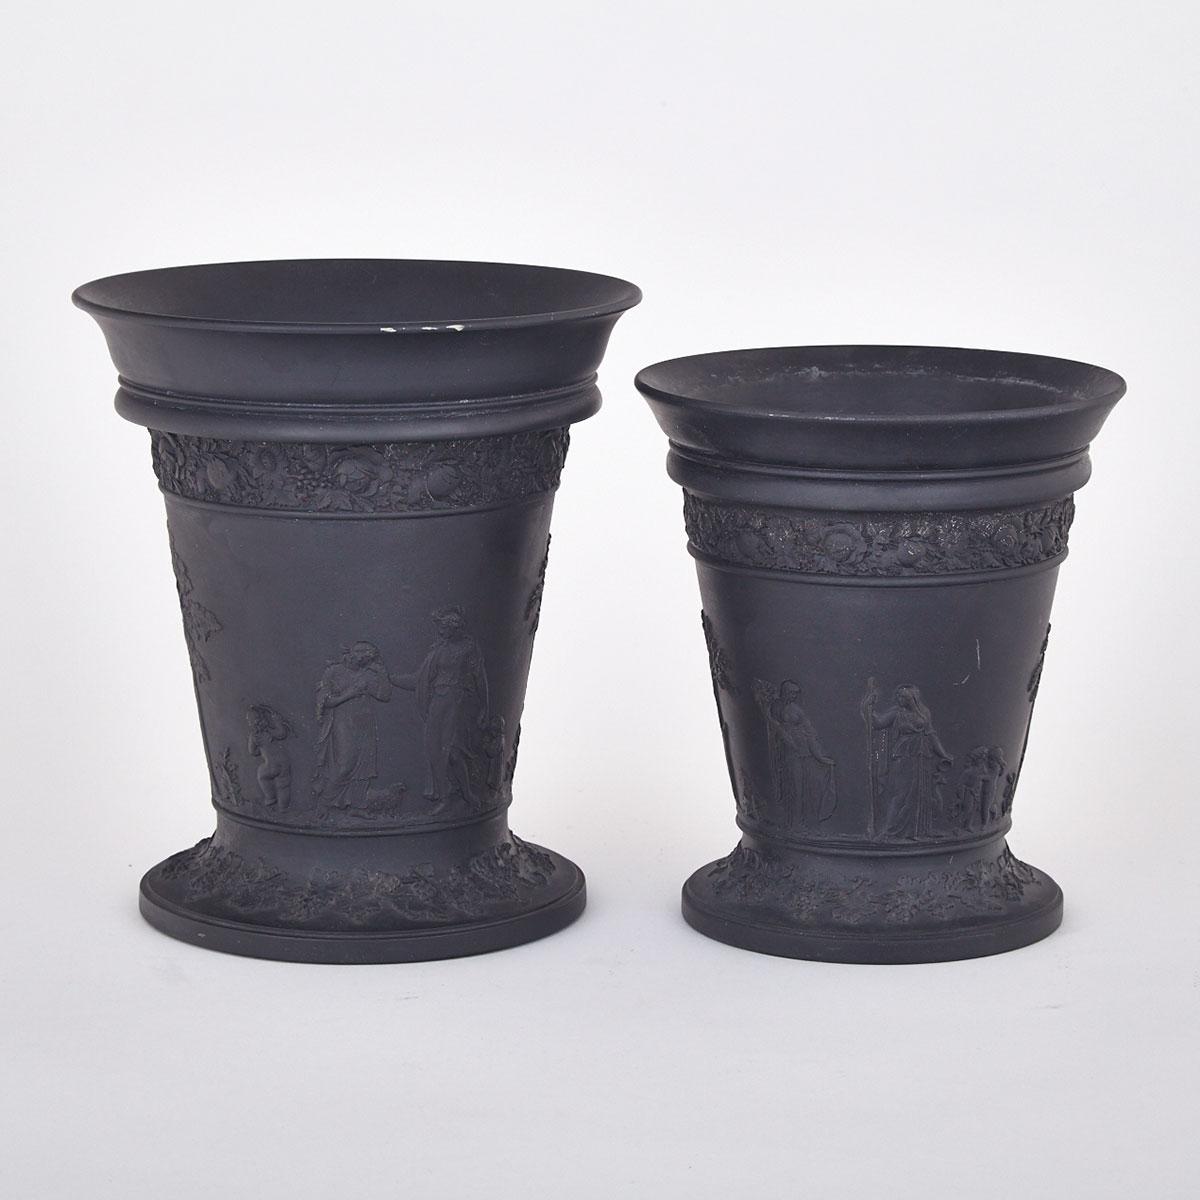 Two Wedgwood Black Basalt Vases, 19th/20th century